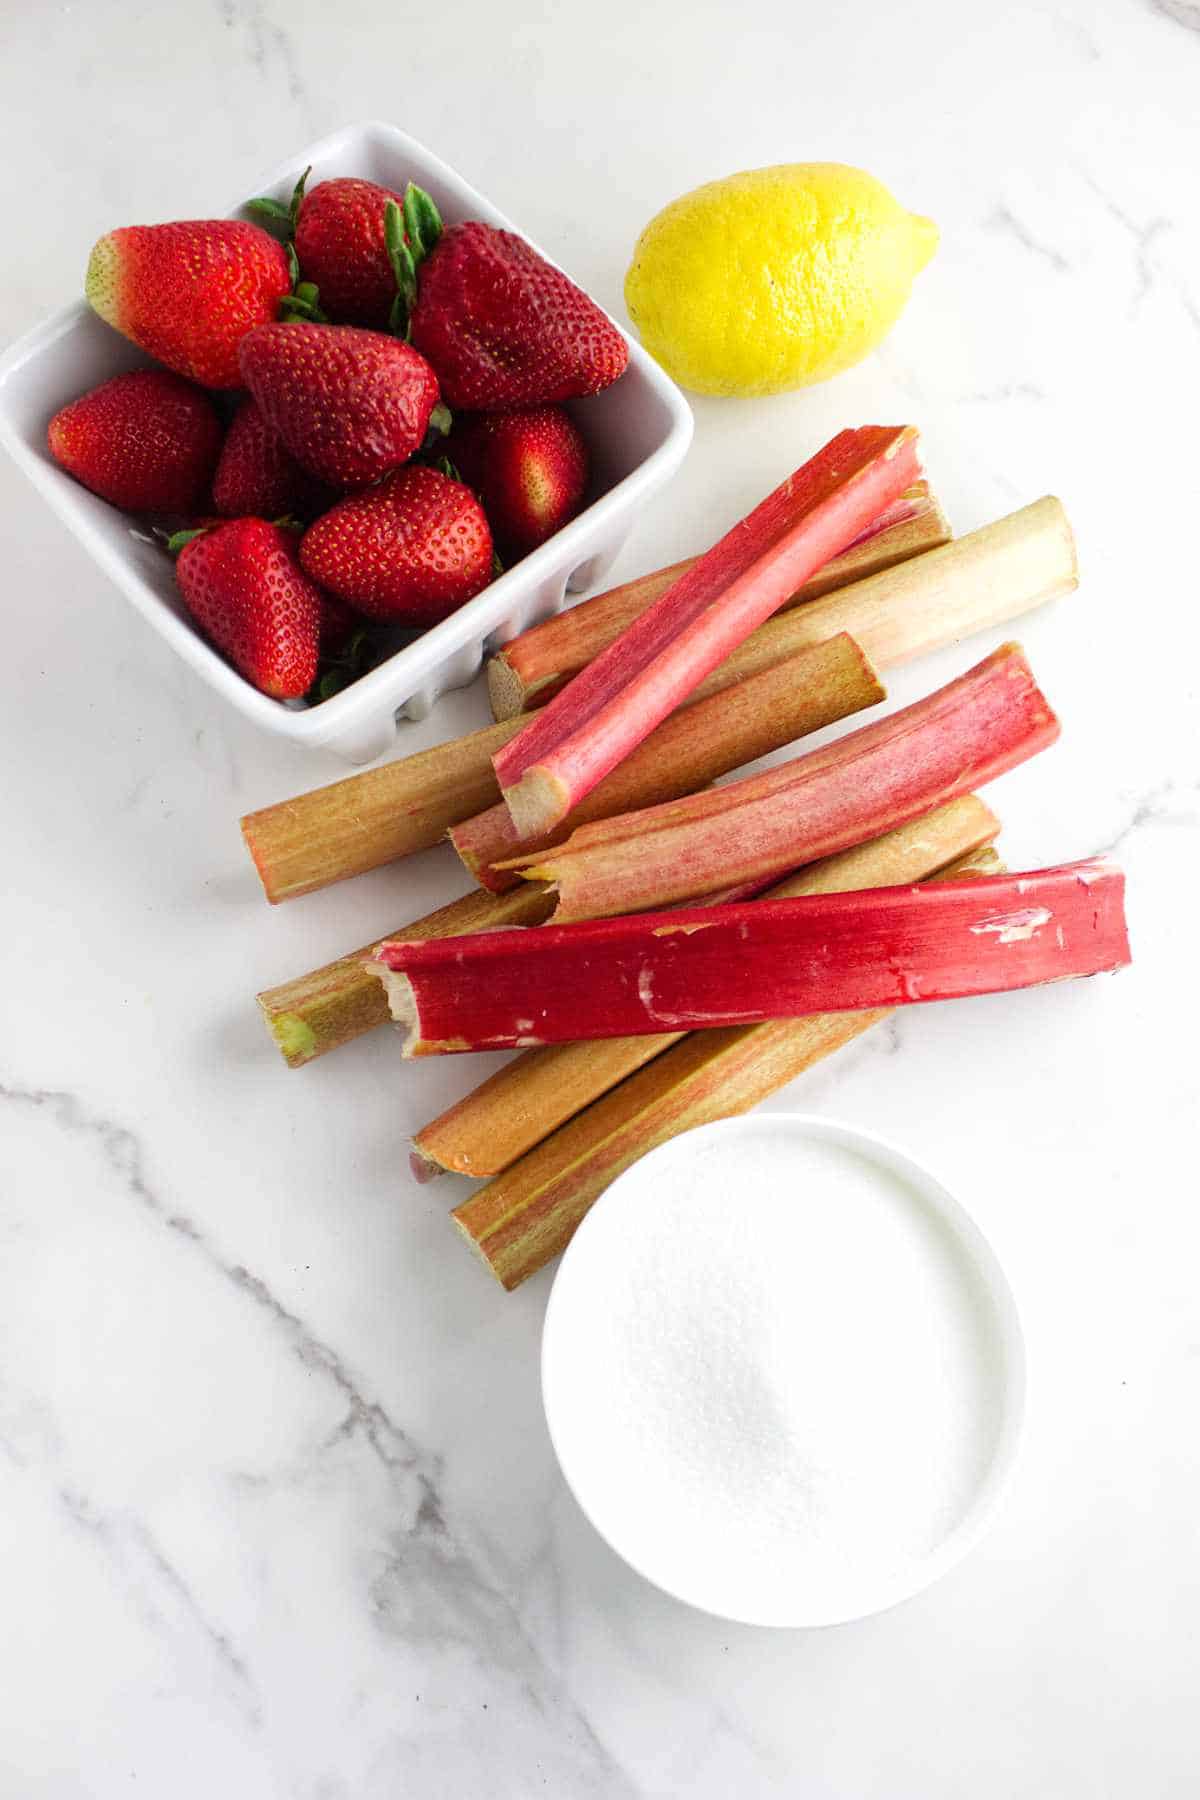 rhubarb stalks, basket of strawberries, sugar, and a lemon on a white background.